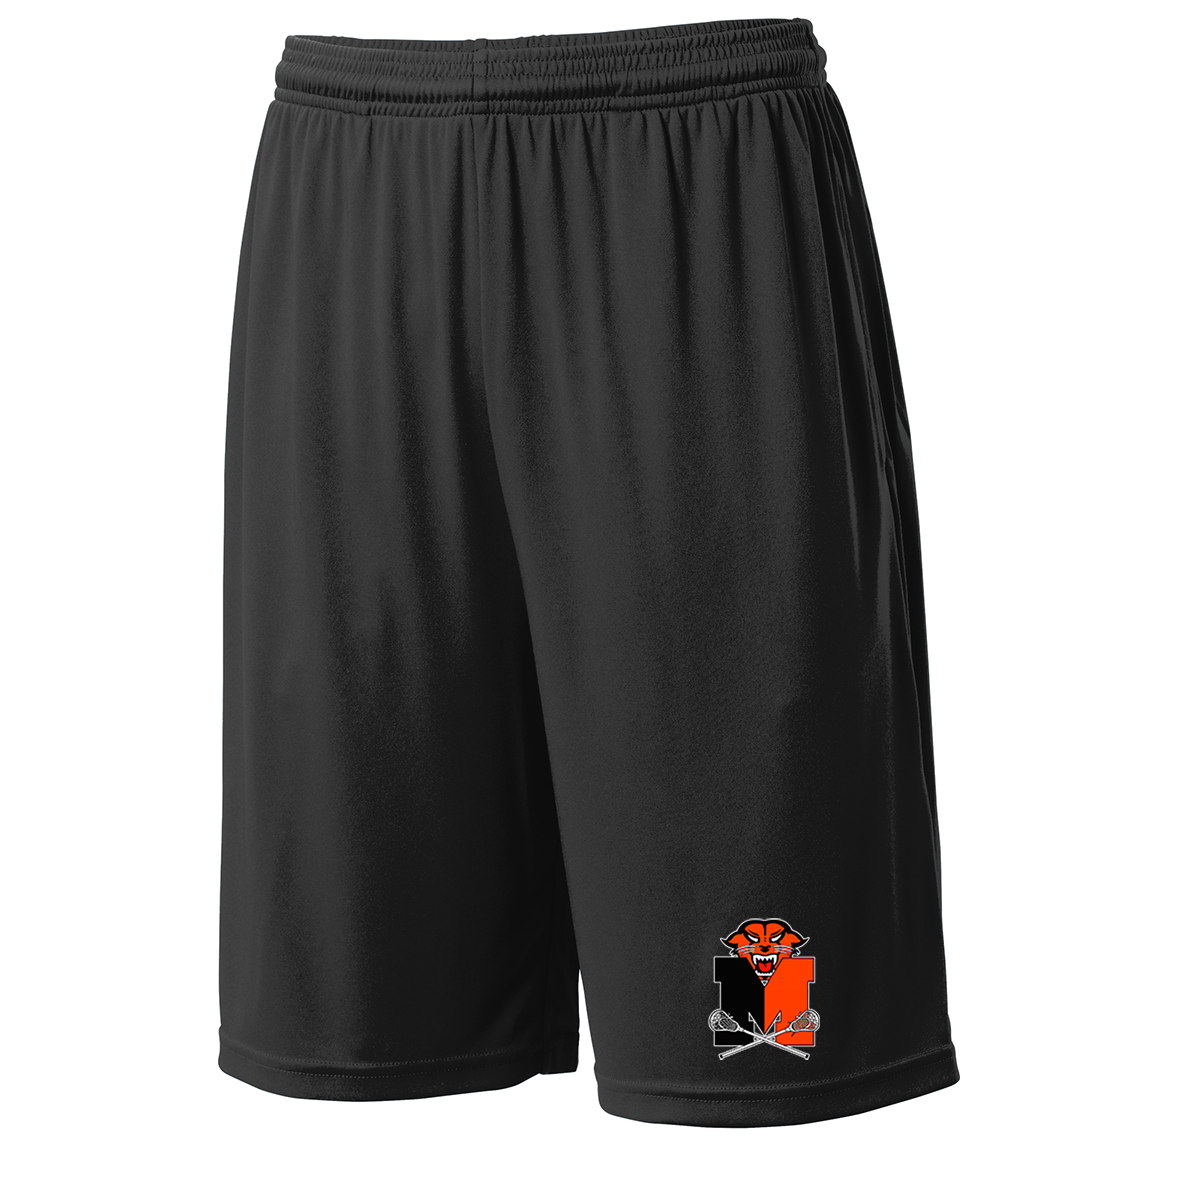 Monroe Lacrosse Black Shorts